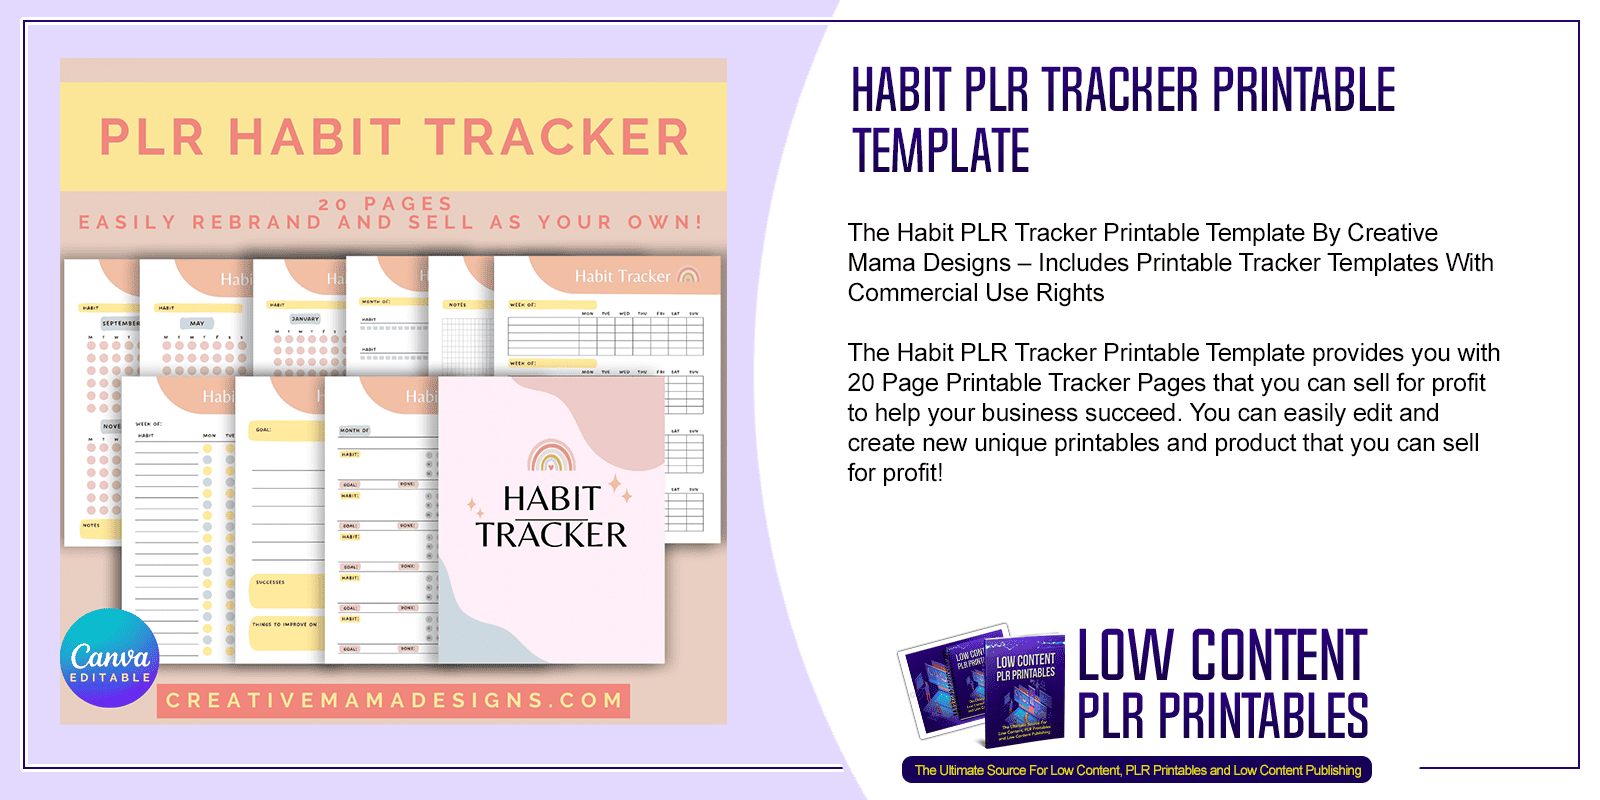 Habit PLR Tracker Printable Template